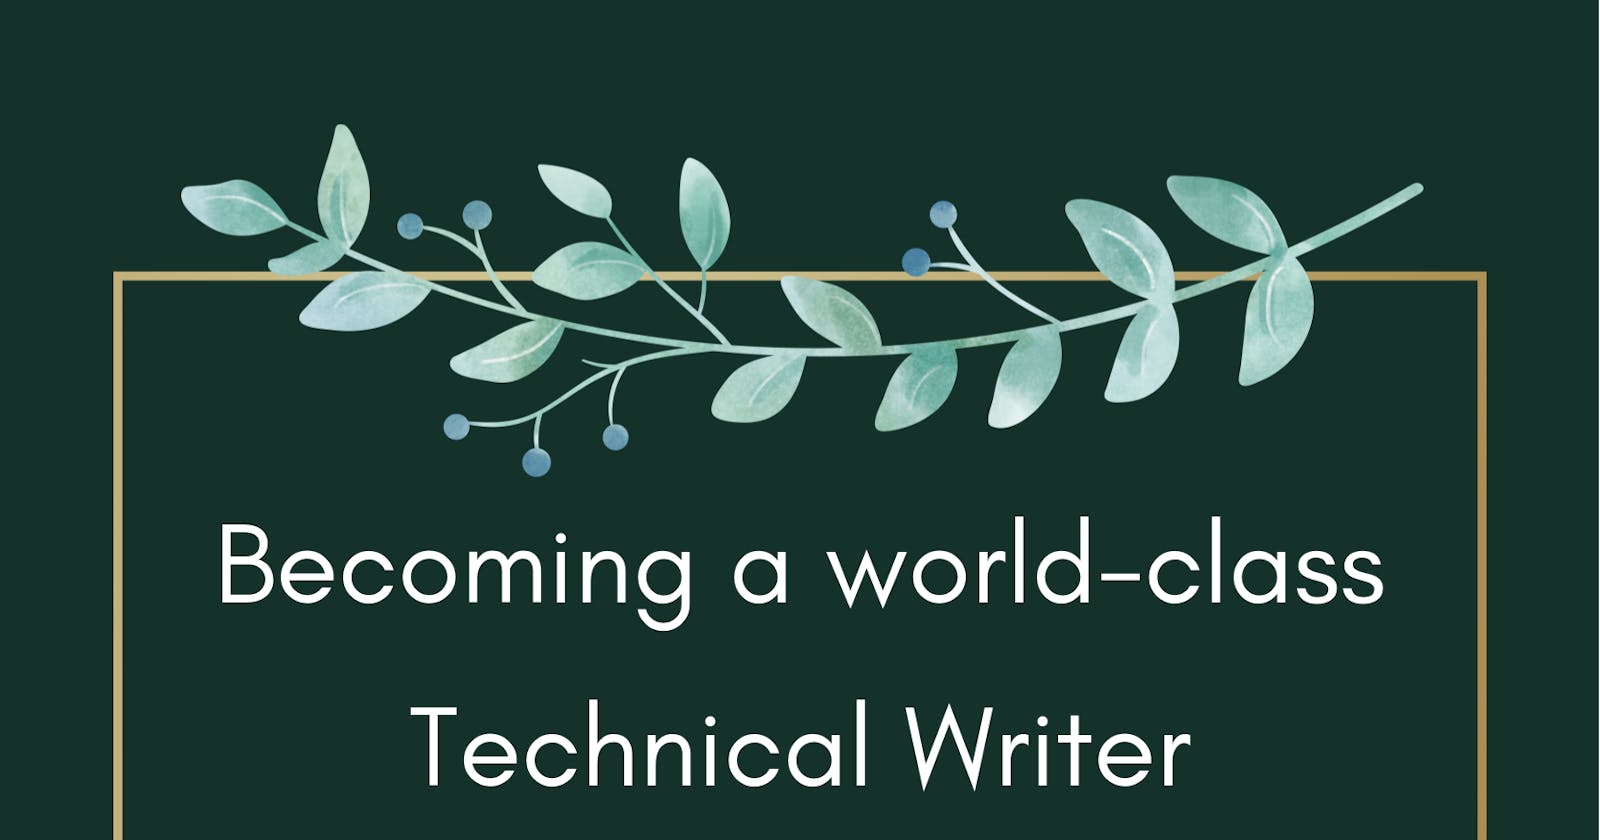 A journey towards becoming a world-class technical Writer.